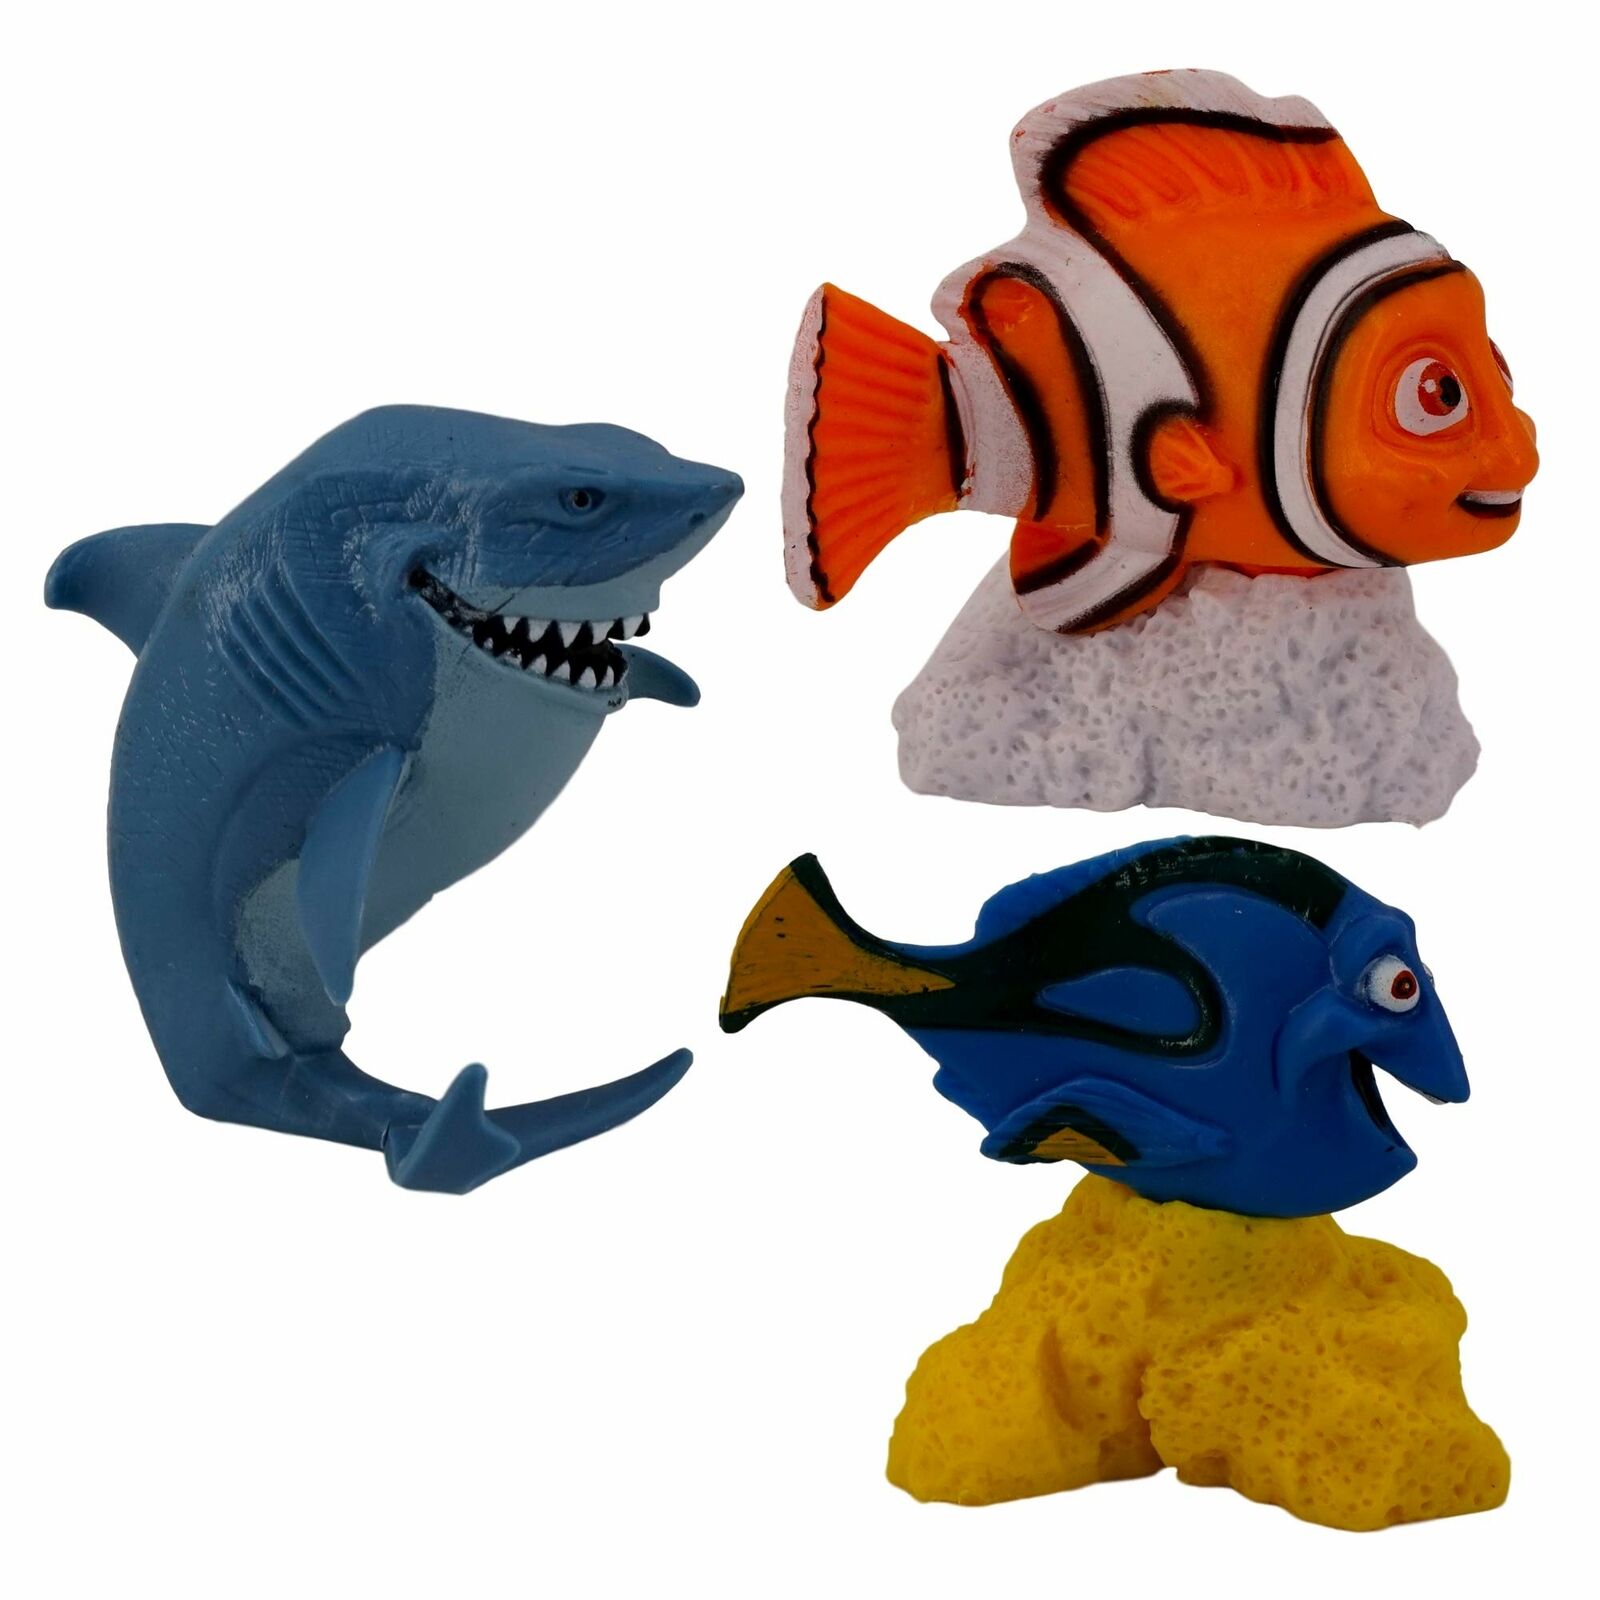 Finding Nemo Plastic Figurine Bundle (Set of 3) Nemo, Dory and Bruce Plastic